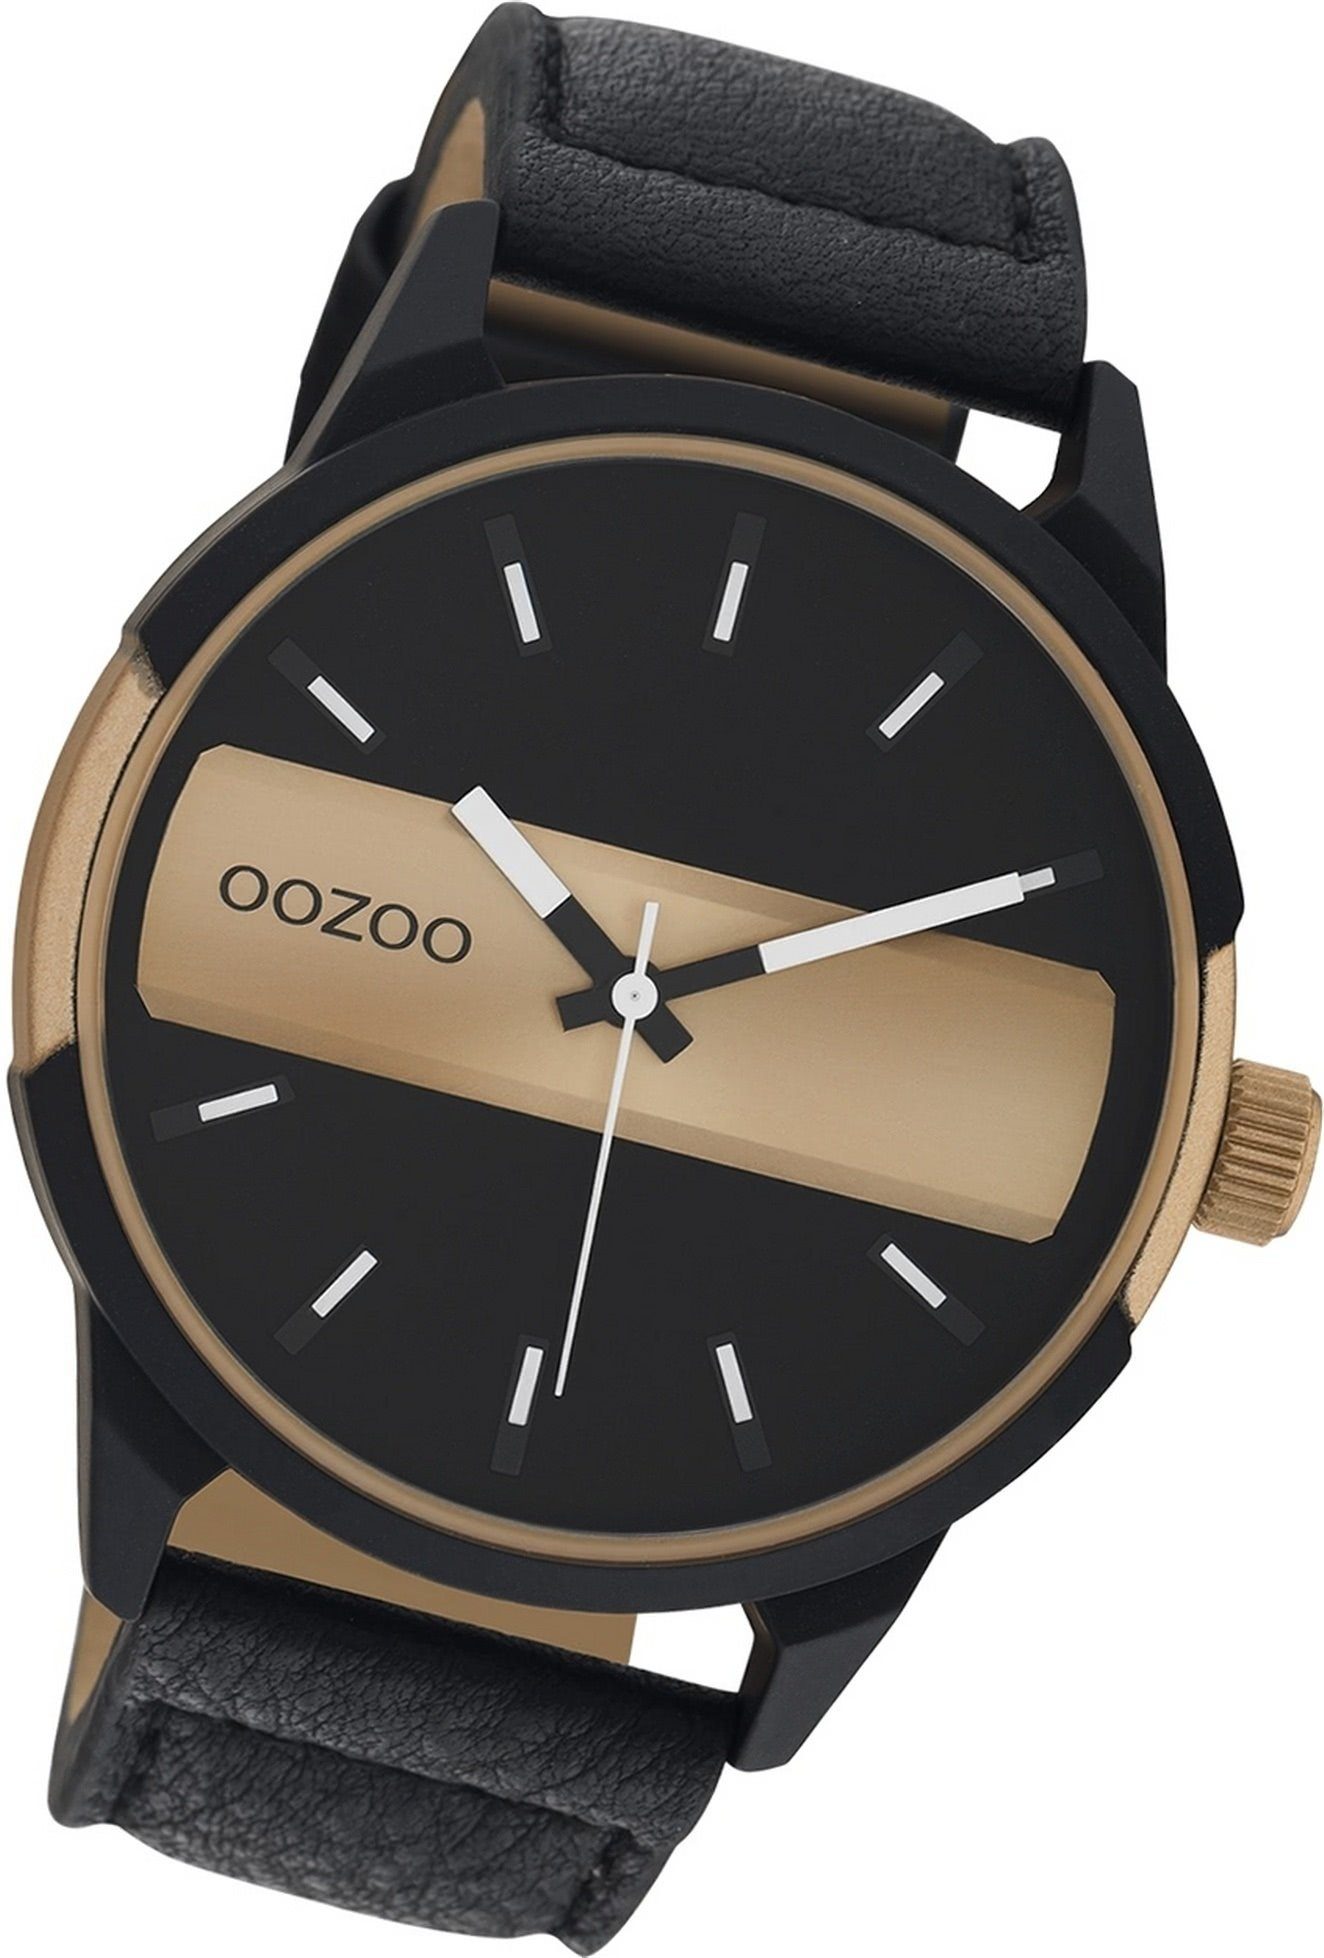 OOZOO Quarzuhr Oozoo Herren Armbanduhr Timepieces, Herrenuhr Lederarmband schwarz, rundes Gehäuse, extra groß (ca. 48mm) | Quarzuhren